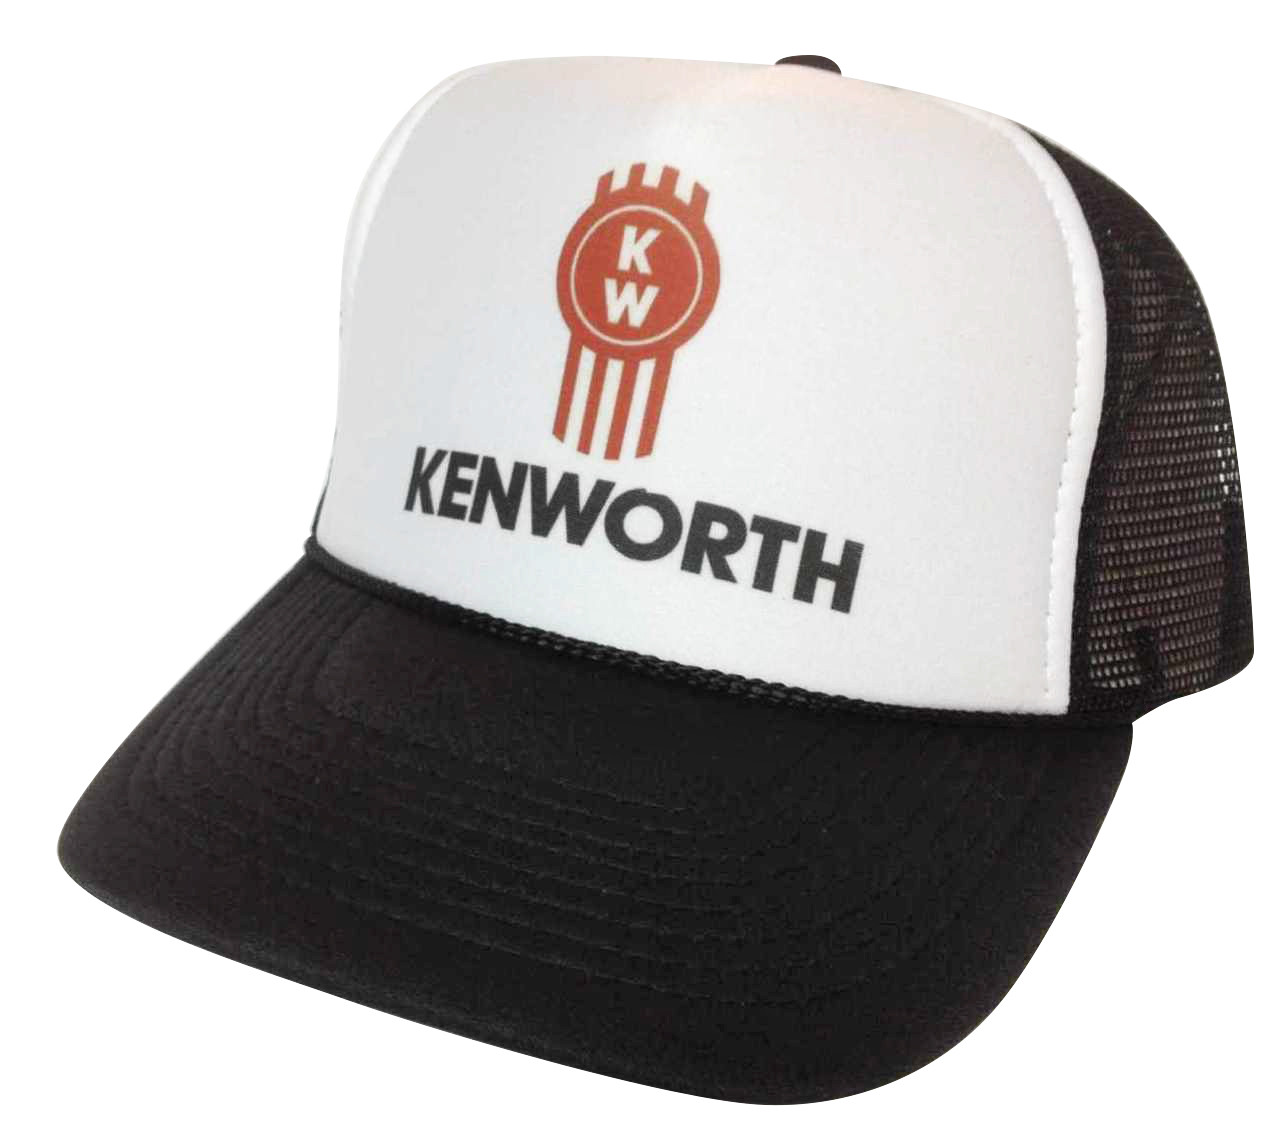 Kenworth Hat, Trucker Hat, New Arrivals Hats, Trucks Hats